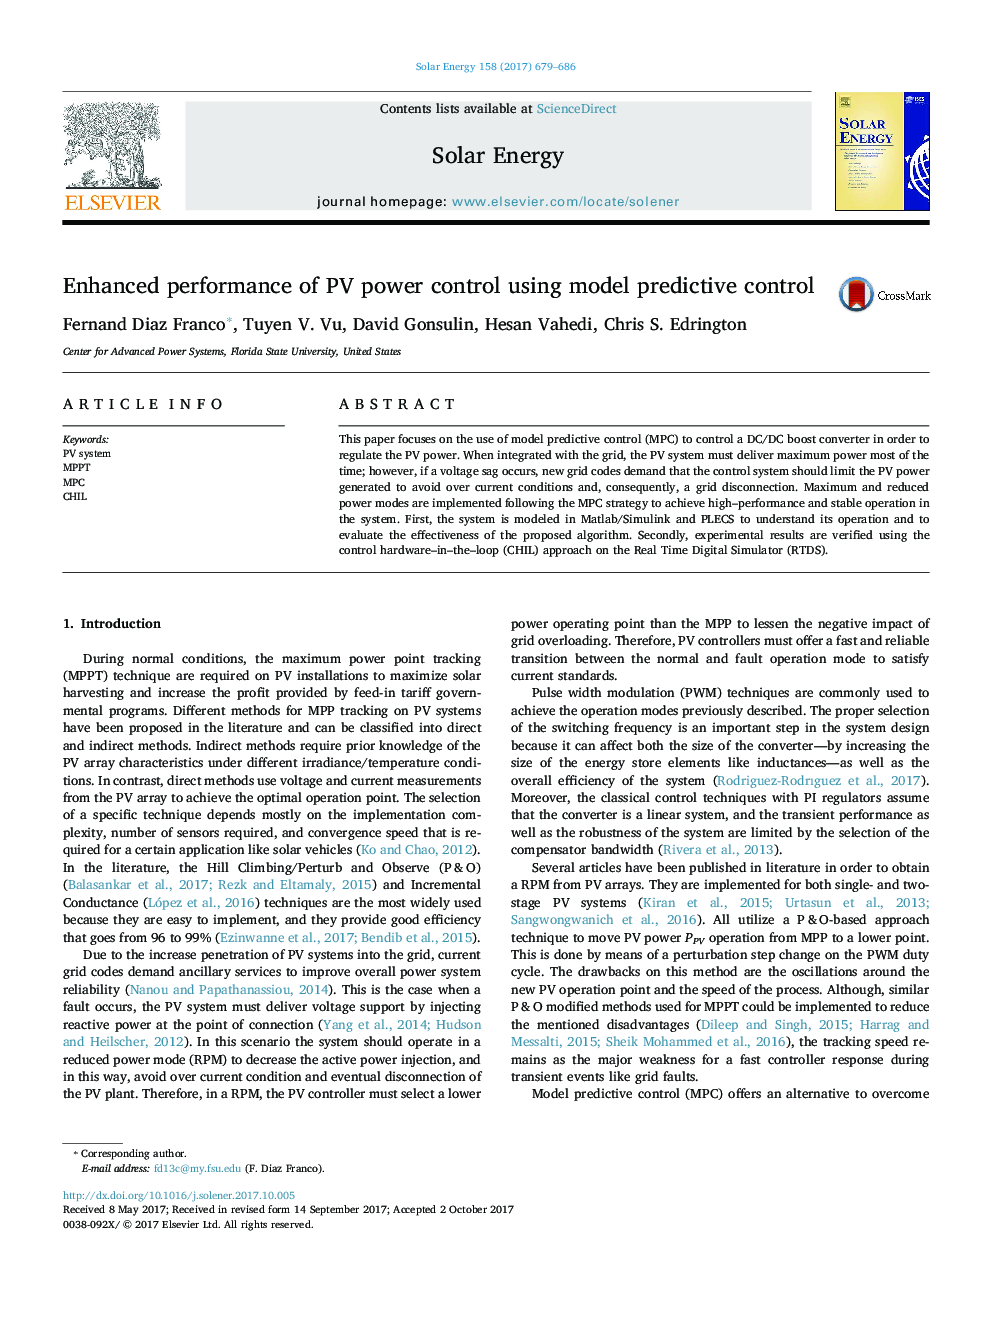 Enhanced performance of PV power control using model predictive control